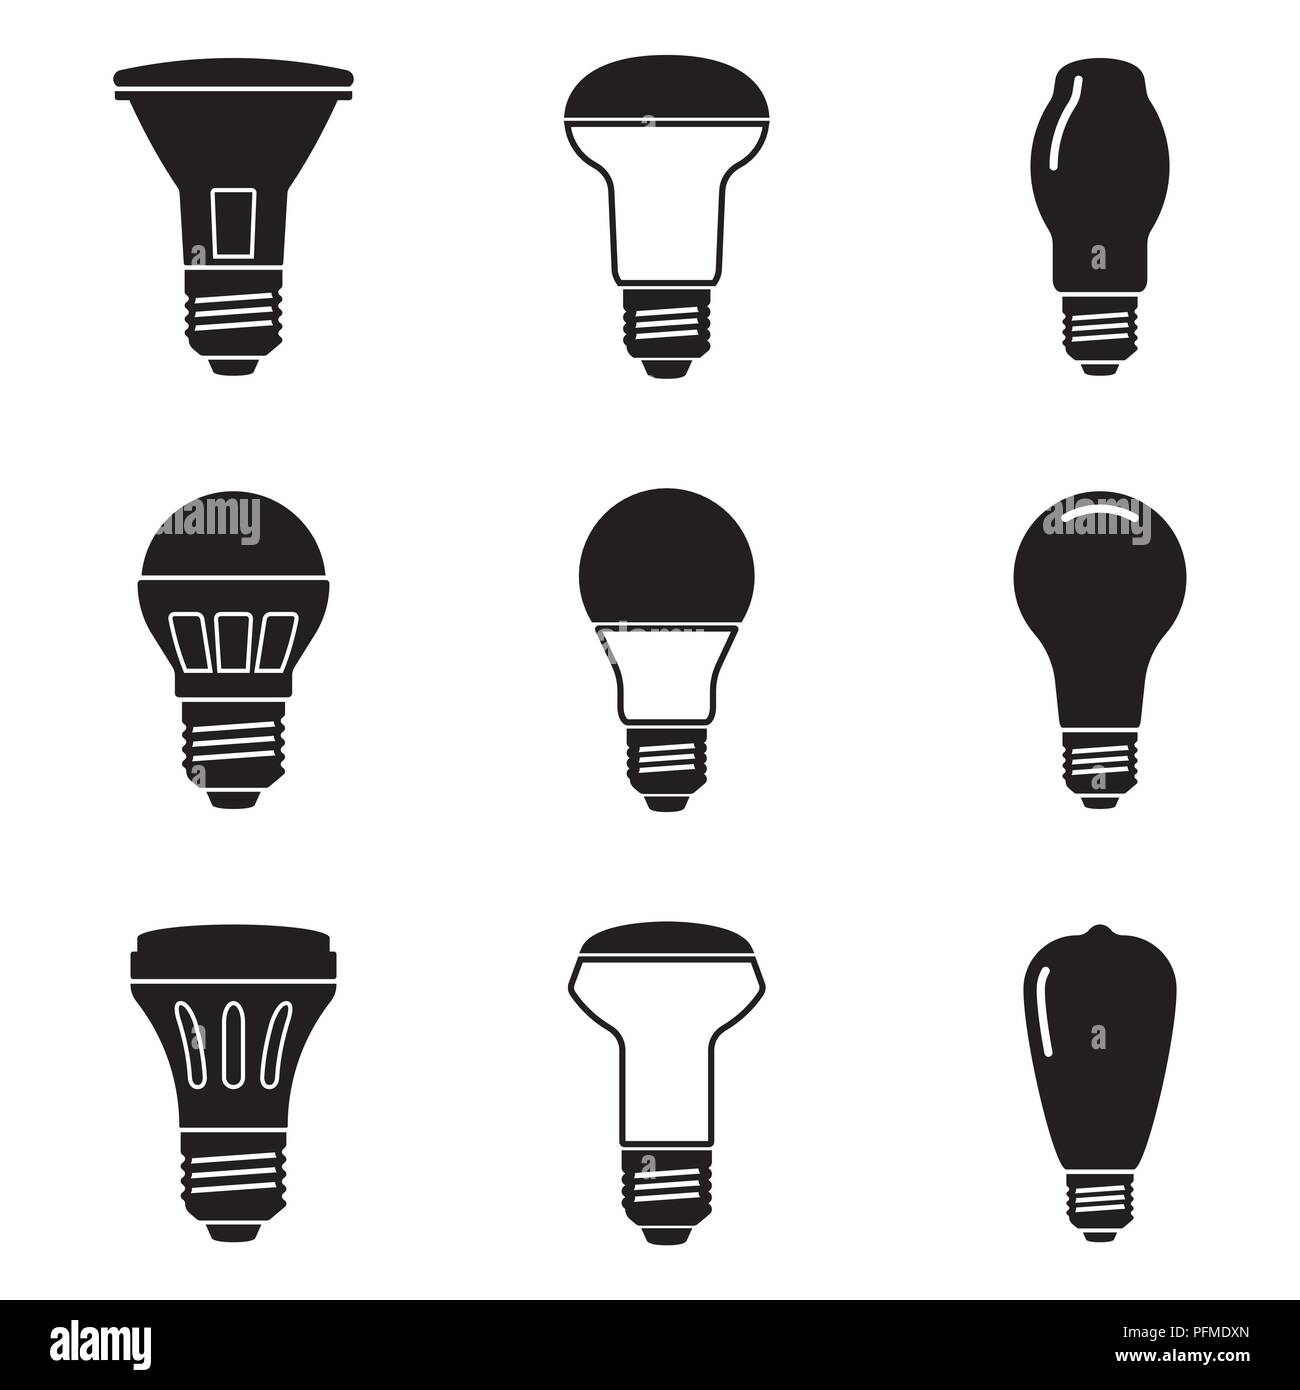 Set of halogen light bulb icons. Flat vector Stock Vector